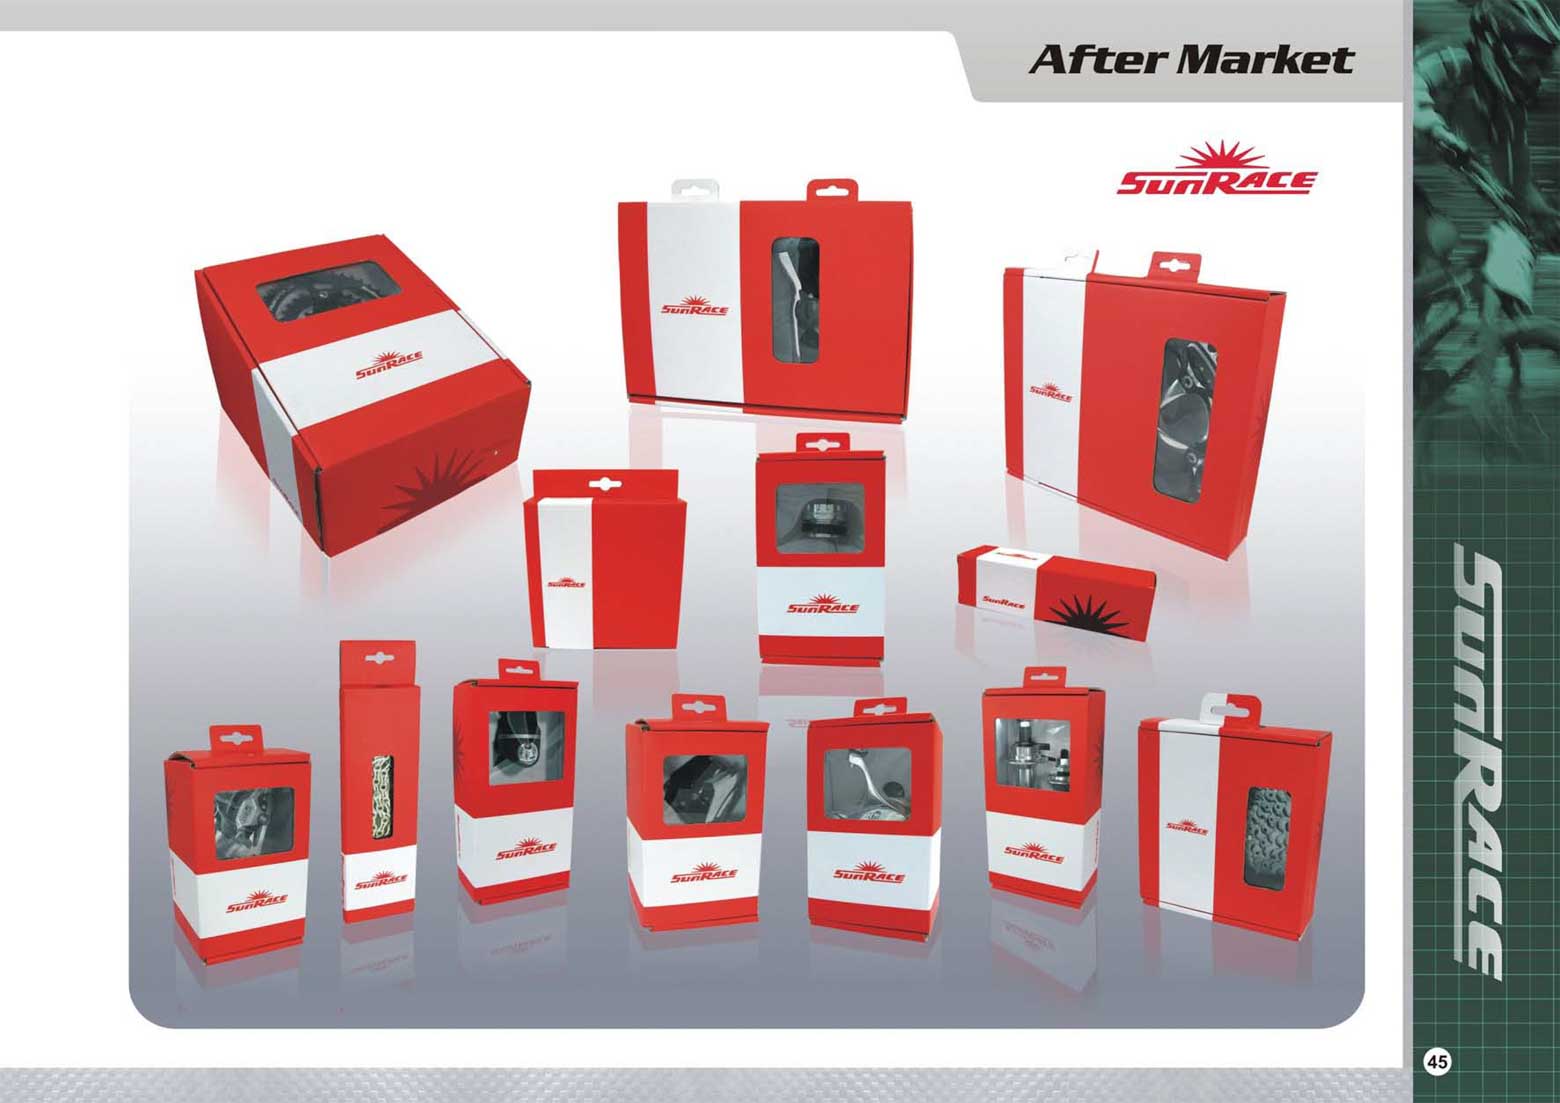 SunRace Product Catalogue 2012-2013 page 45 main image